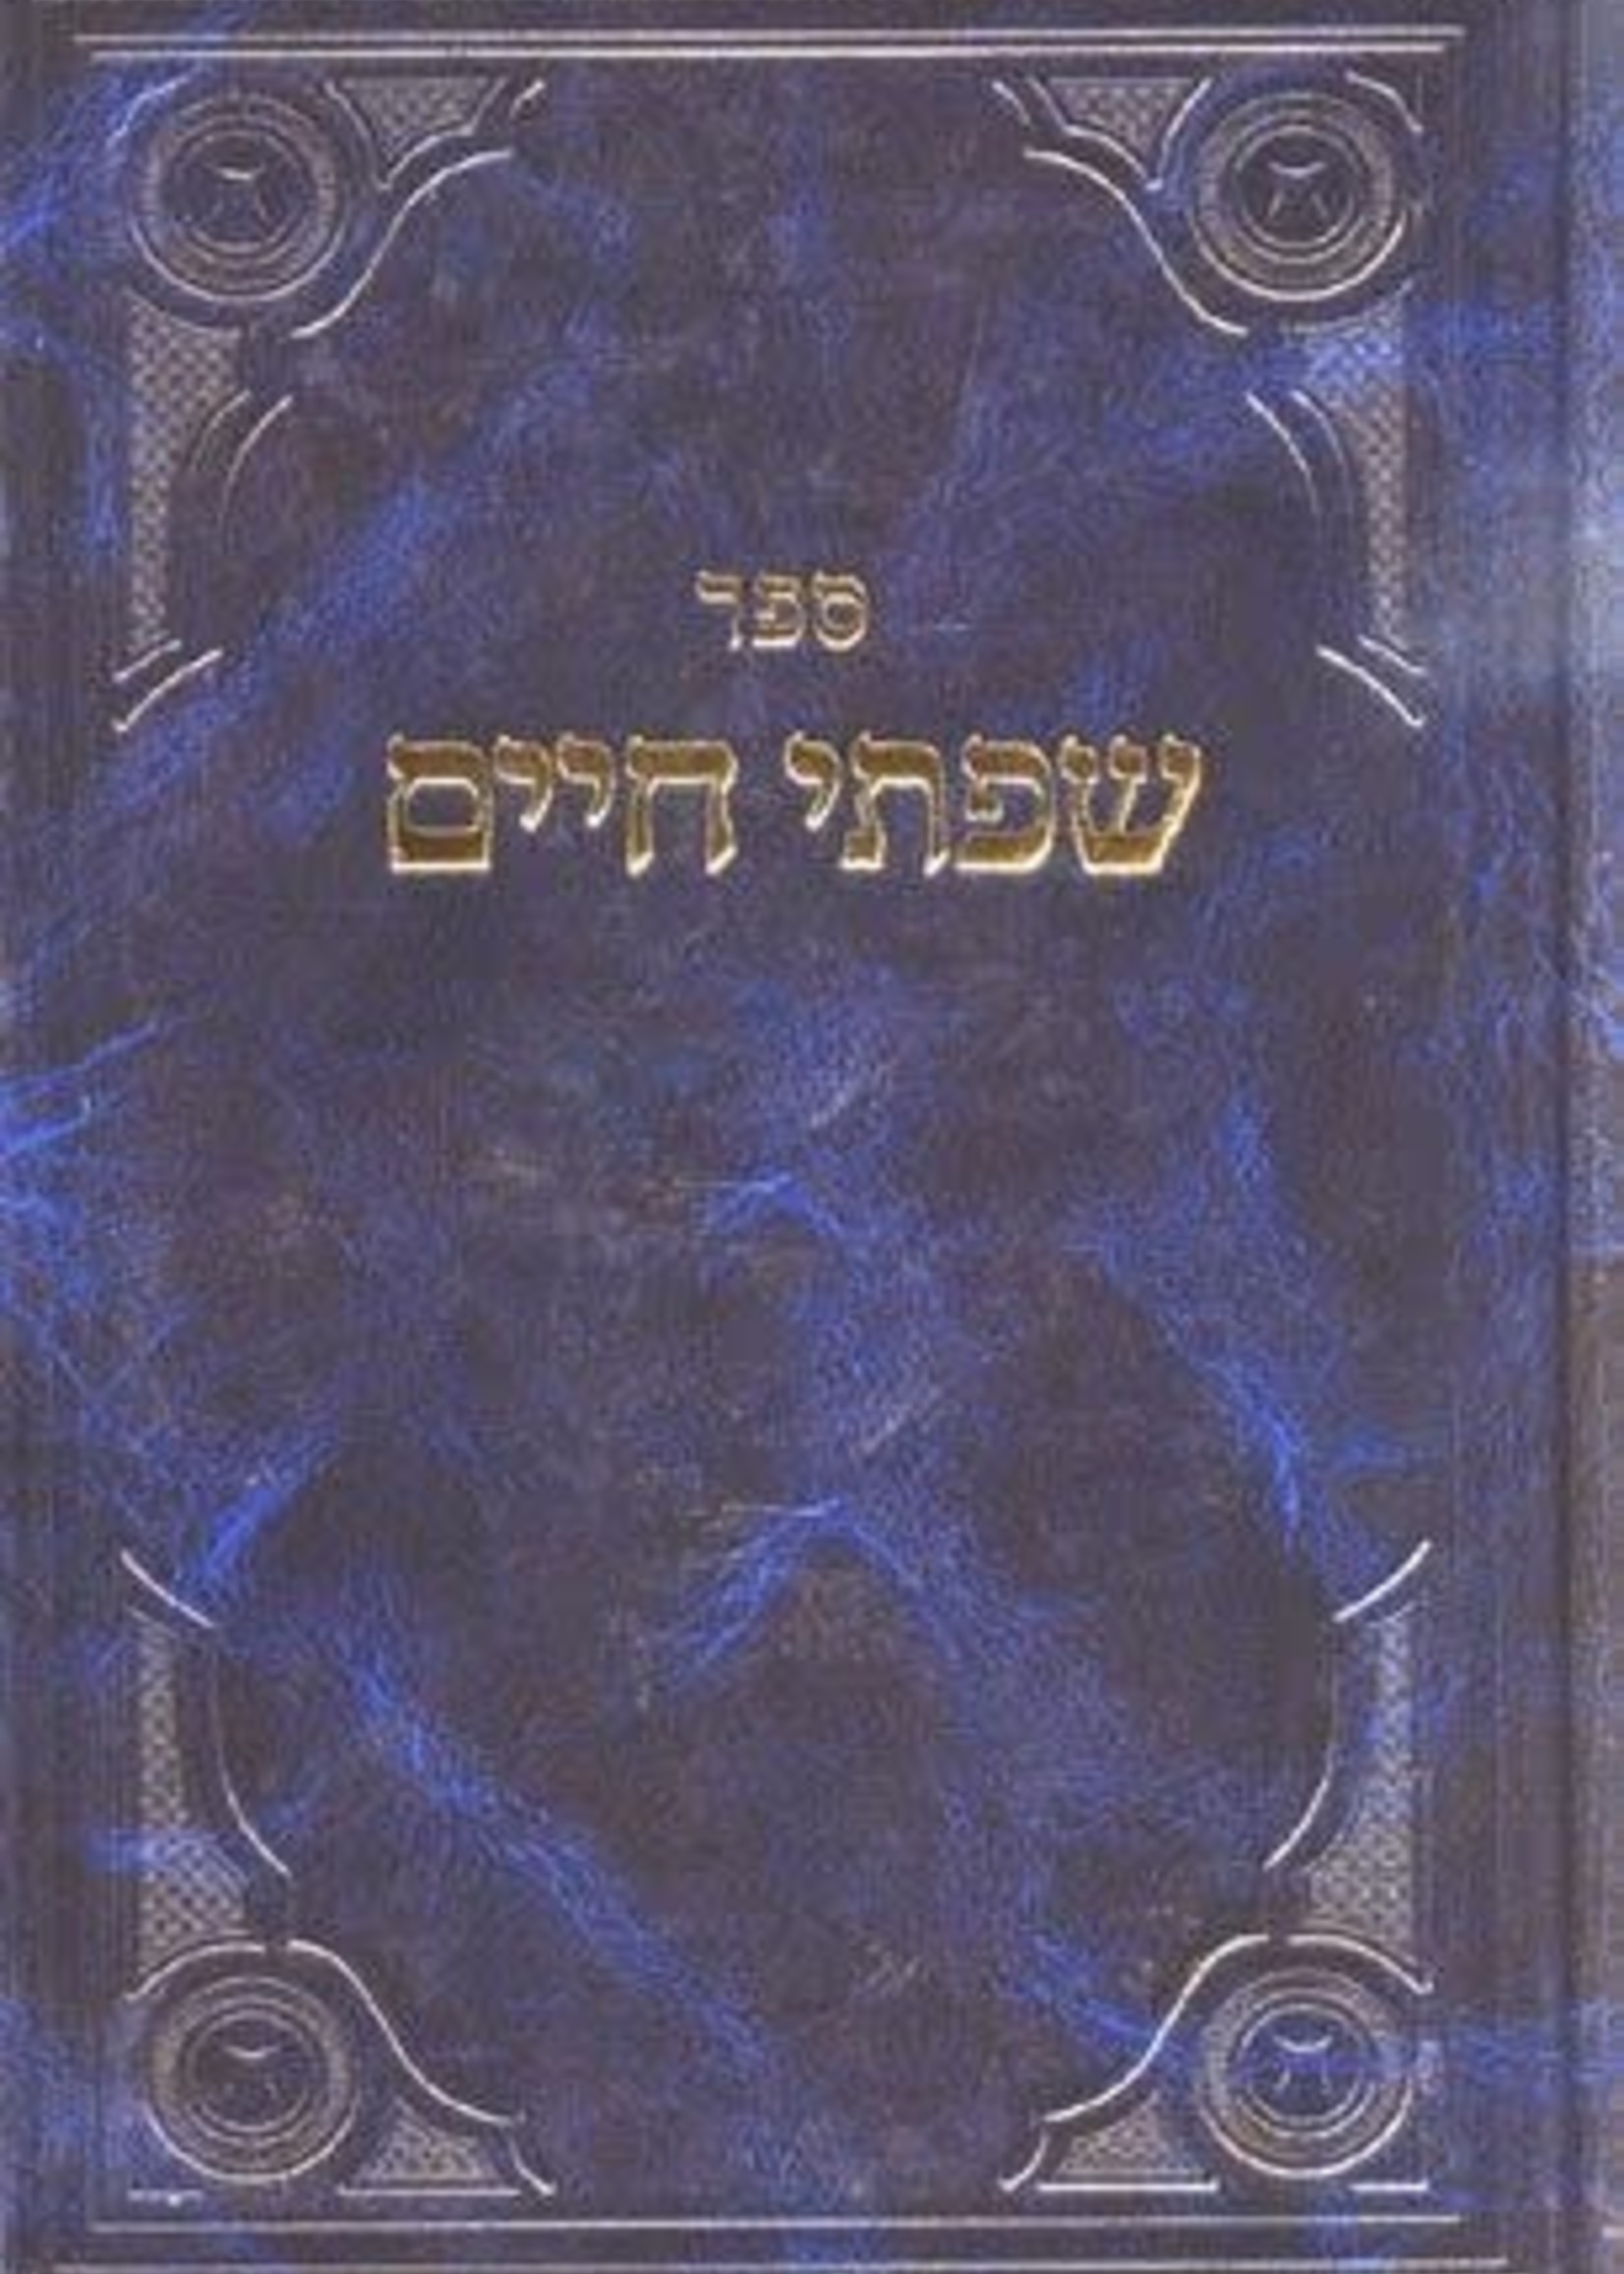 Rabbi Chaim Freidlander Sifsei Chaim - Emunah Ubechirah/  שפתי חיים - אמונה ובחירה